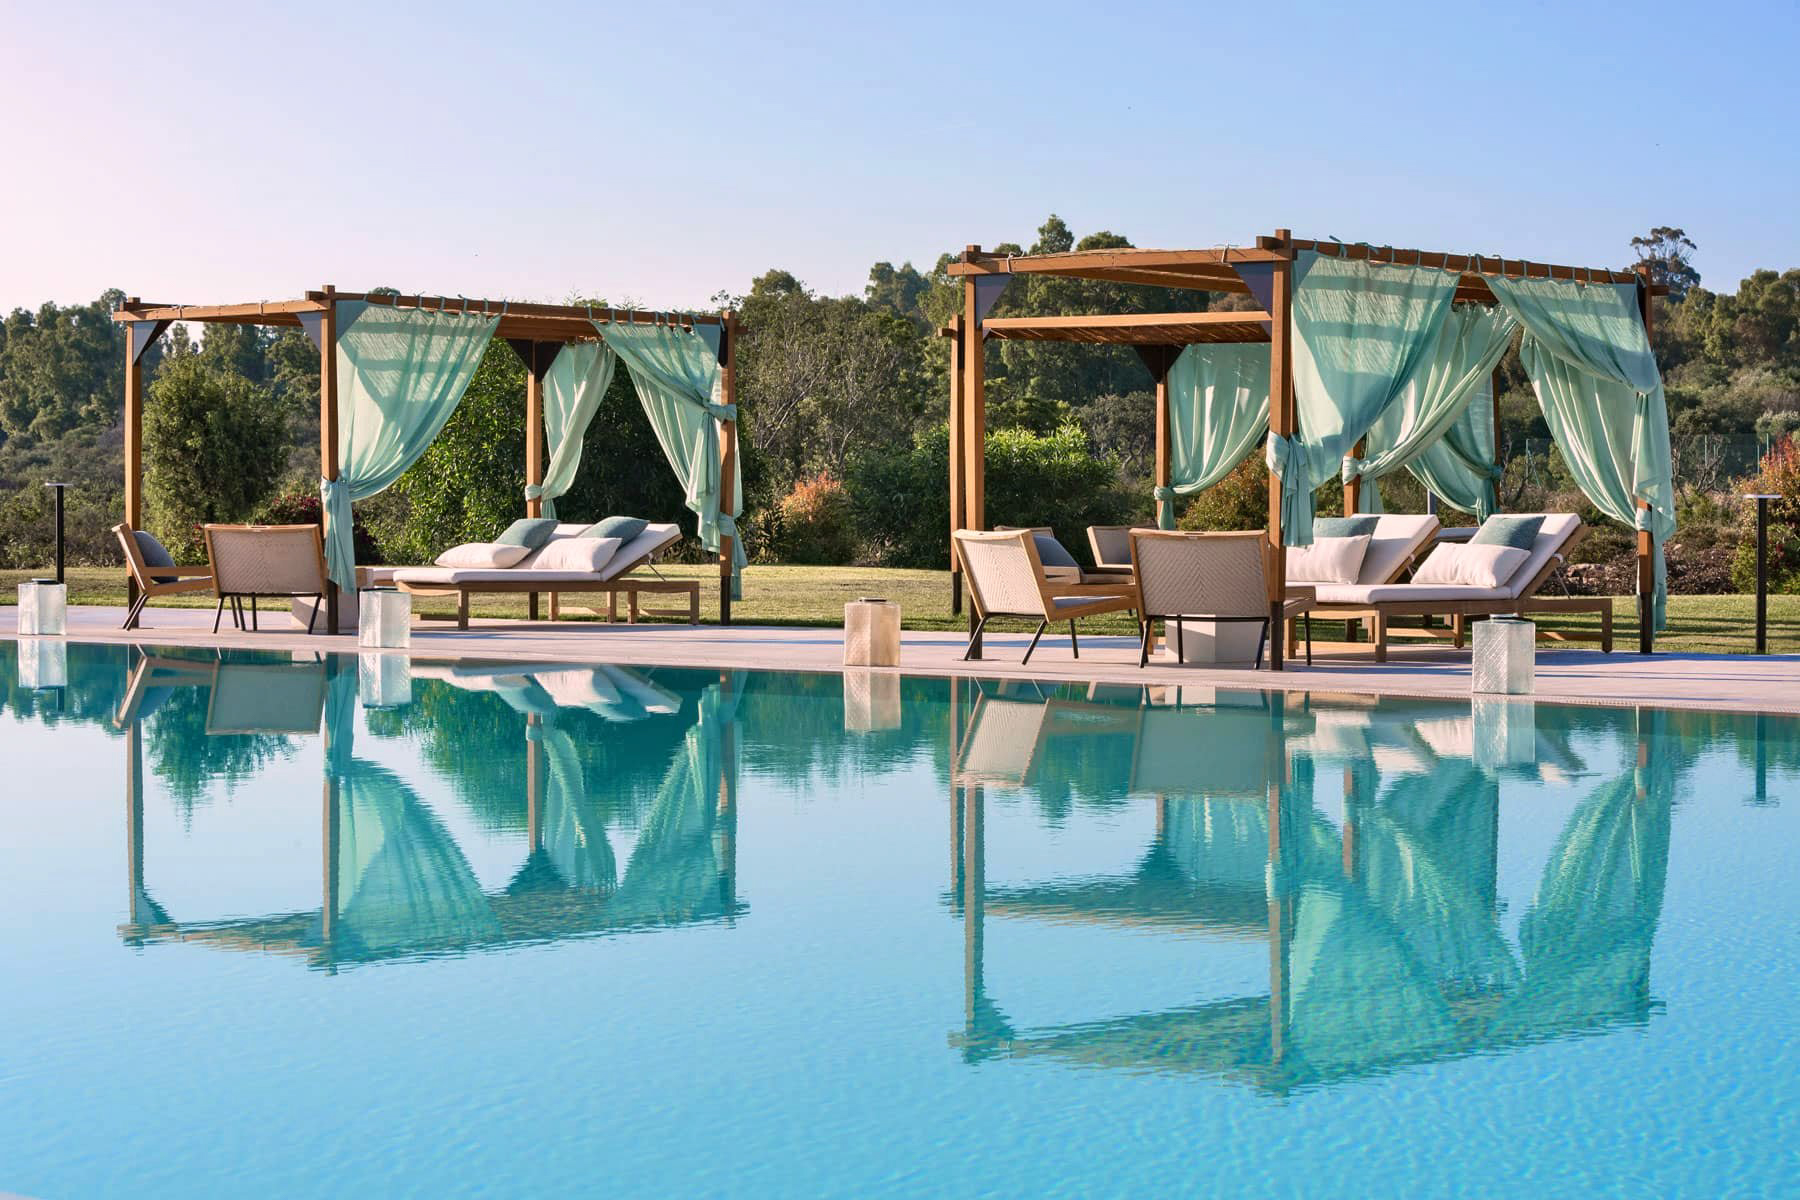 Baglioni Resort Sardinia – San Teodoro, Sardegna, Italy – Pool Deck